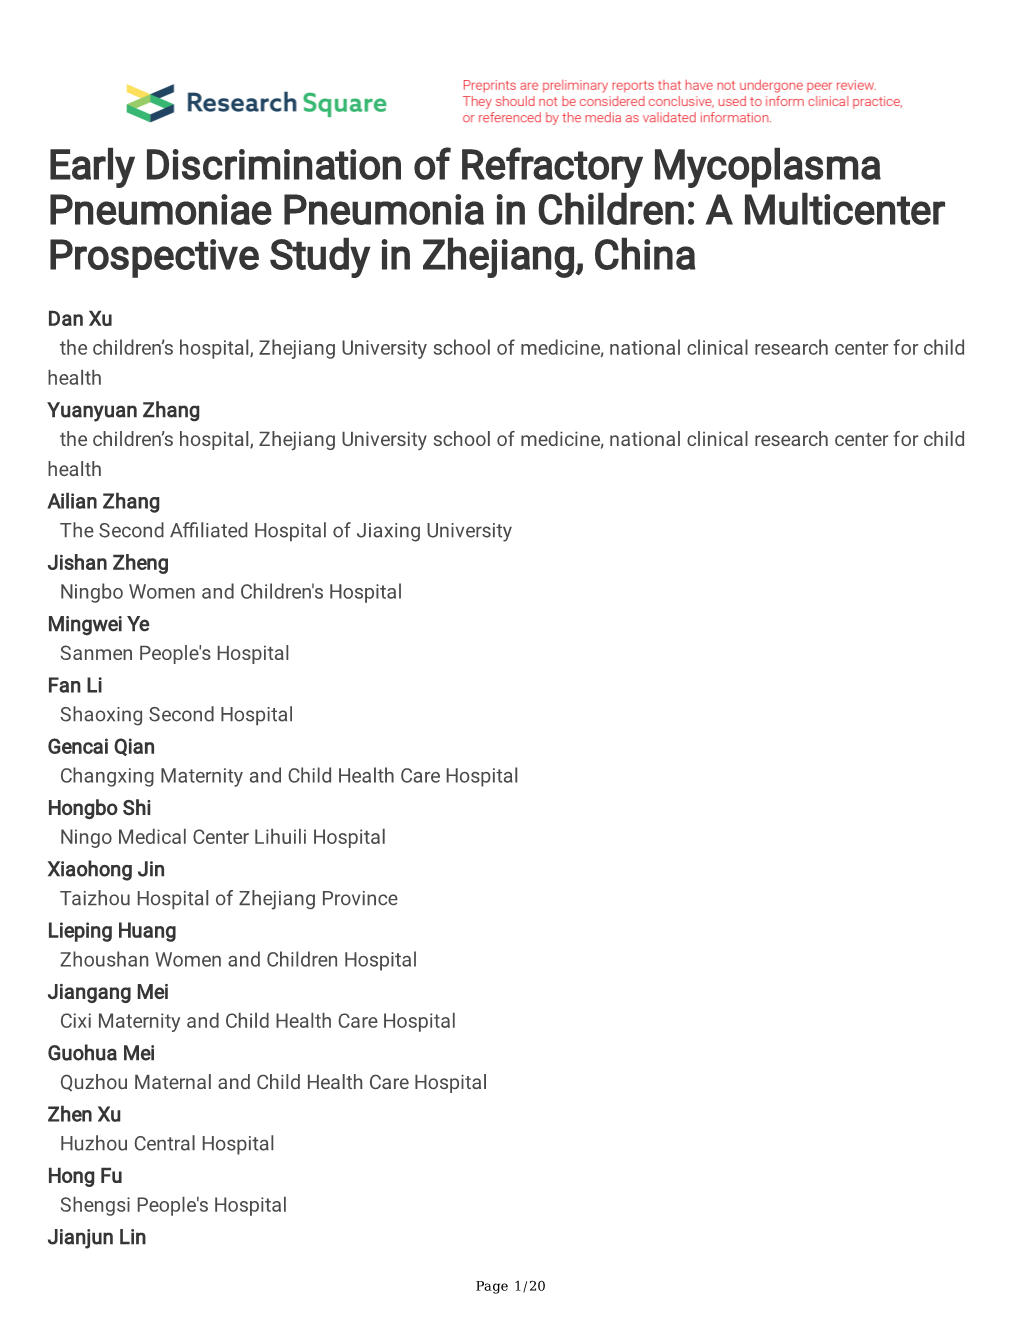 Early Discrimination of Refractory Mycoplasma Pneumoniae Pneumonia in Children: a Multicenter Prospective Study in Zhejiang, China